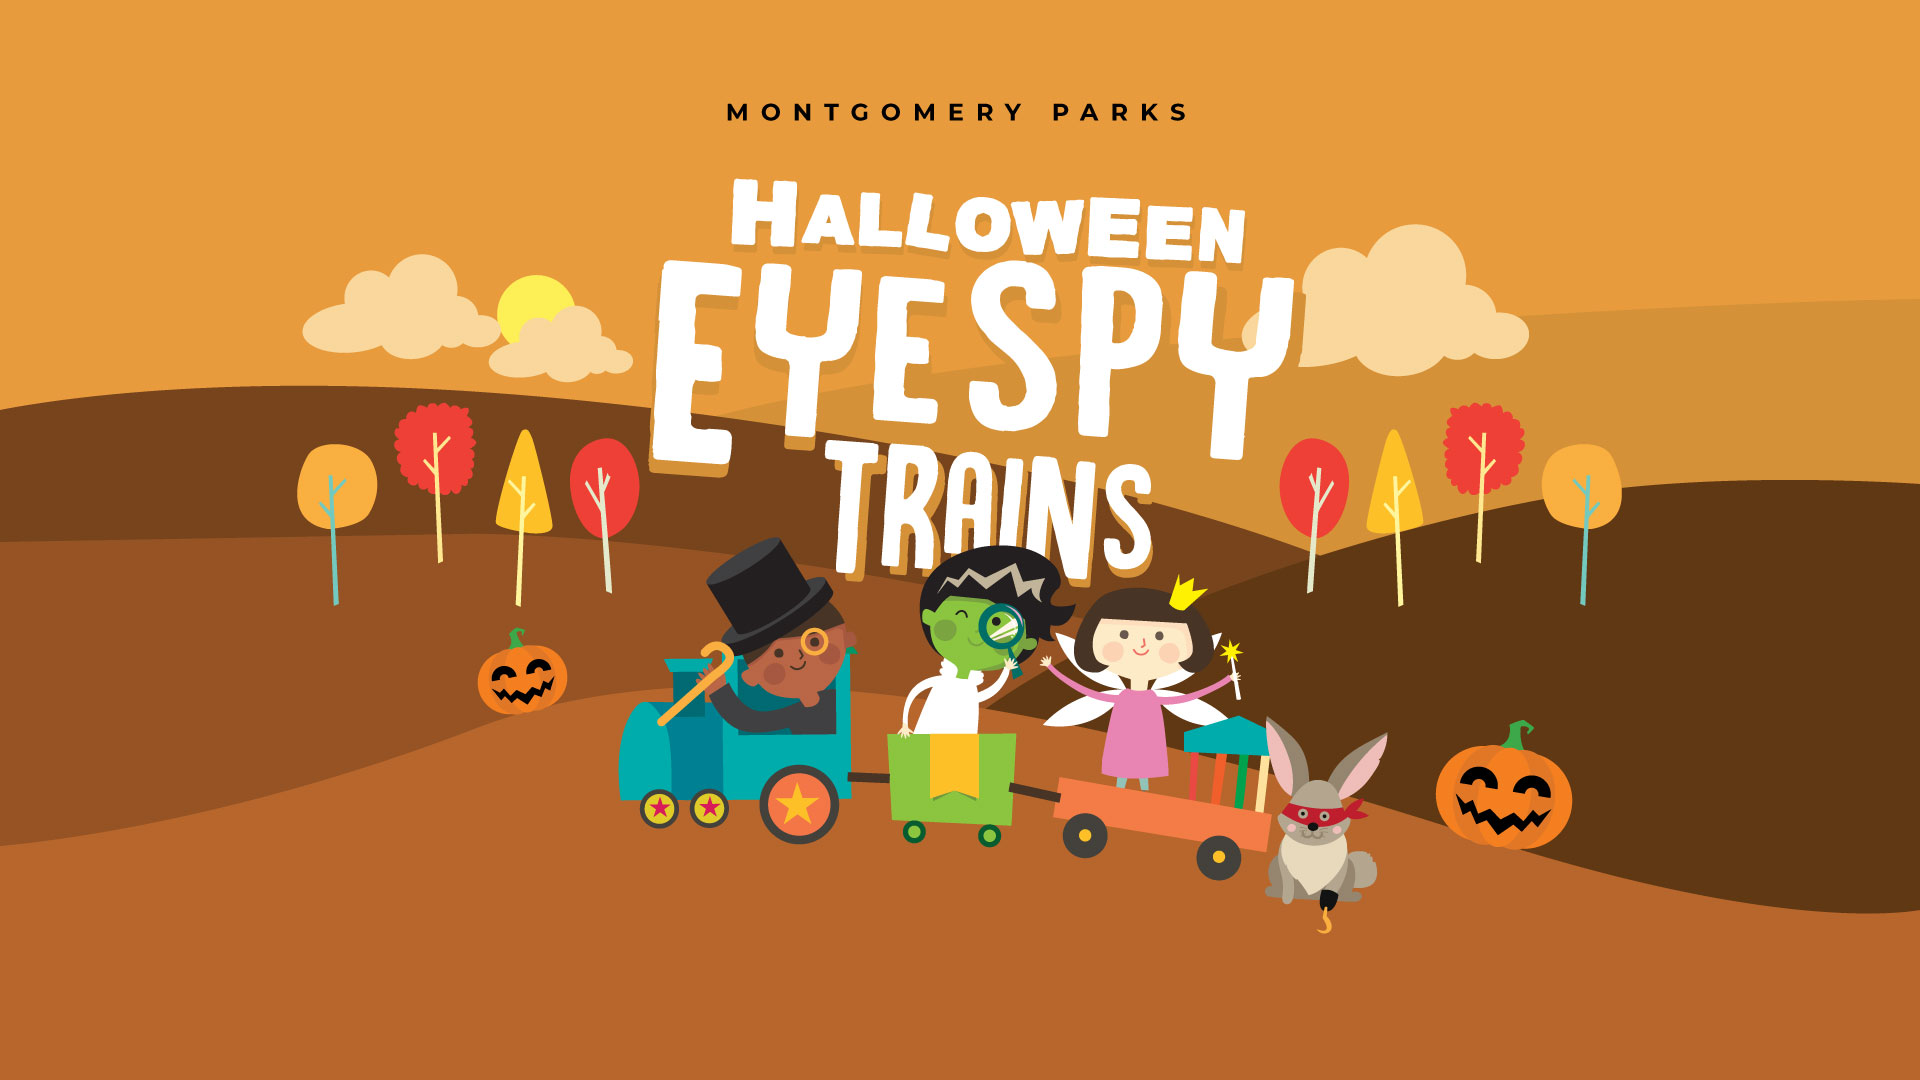 Halloween Eye Spy Trains Graphic